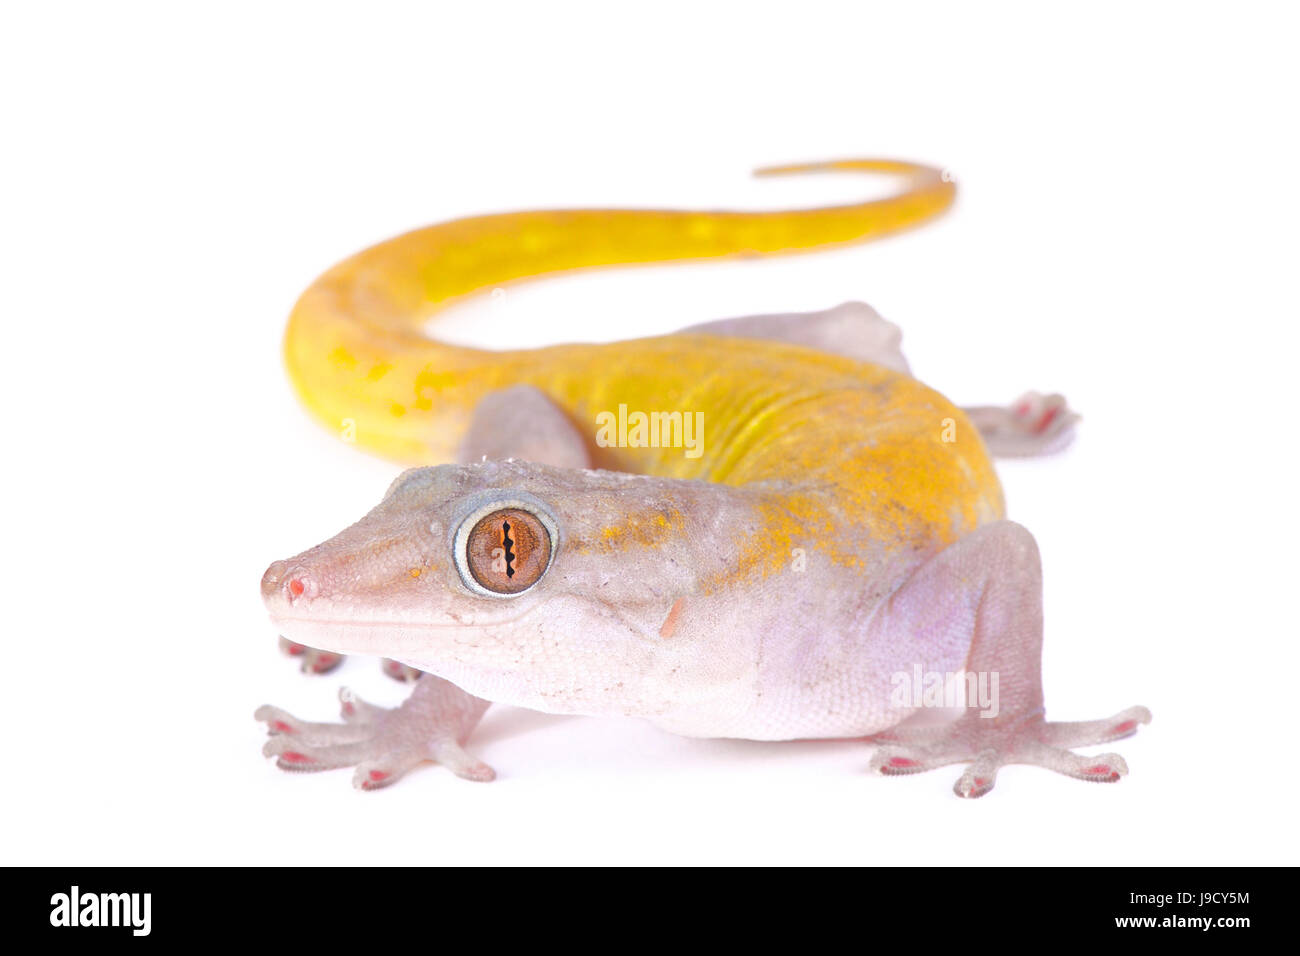 Golden Gecko, Gekko badenii Stockfoto